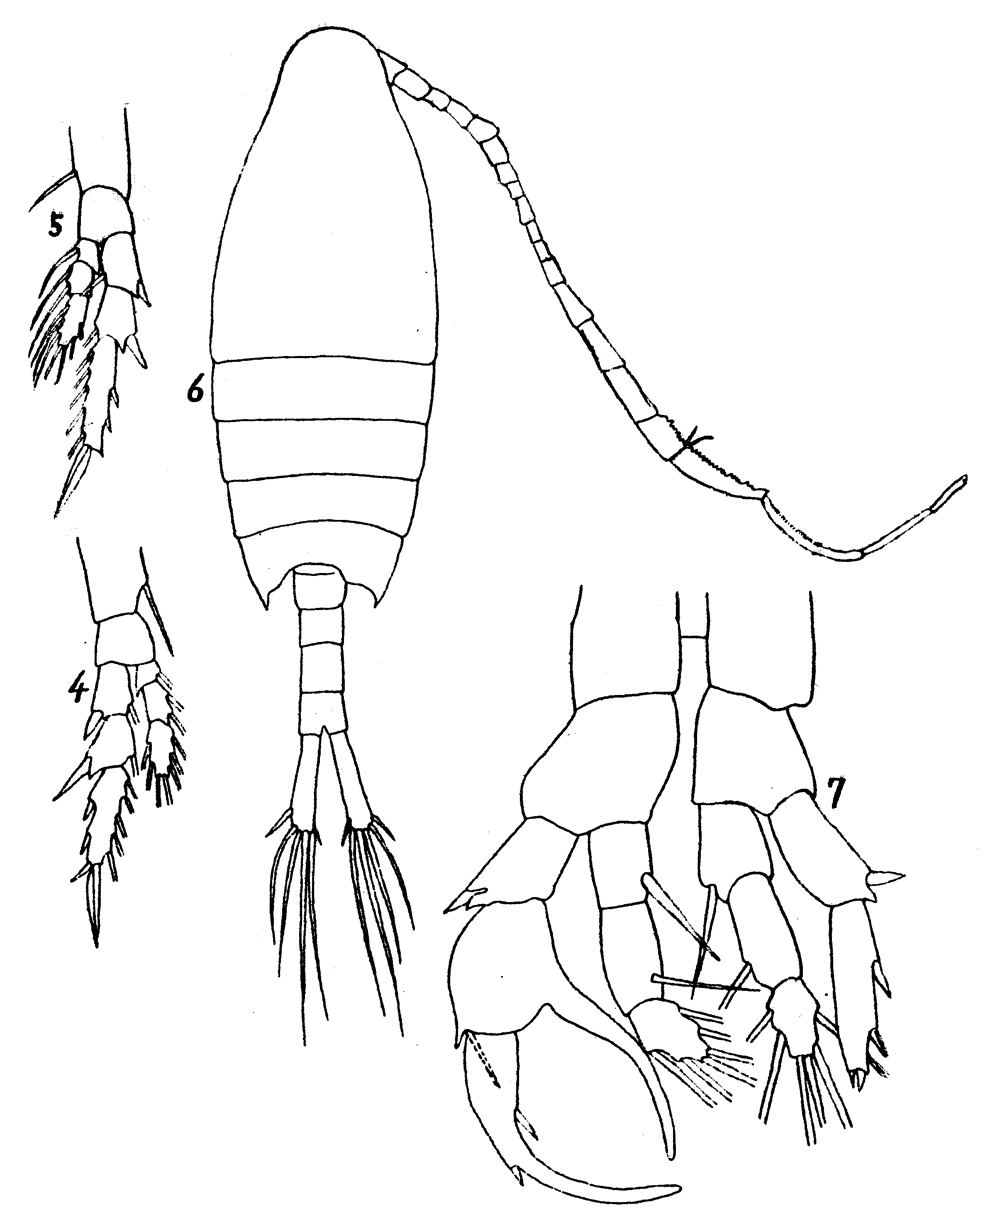 Species Centropages kroyeri - Plate 3 of morphological figures